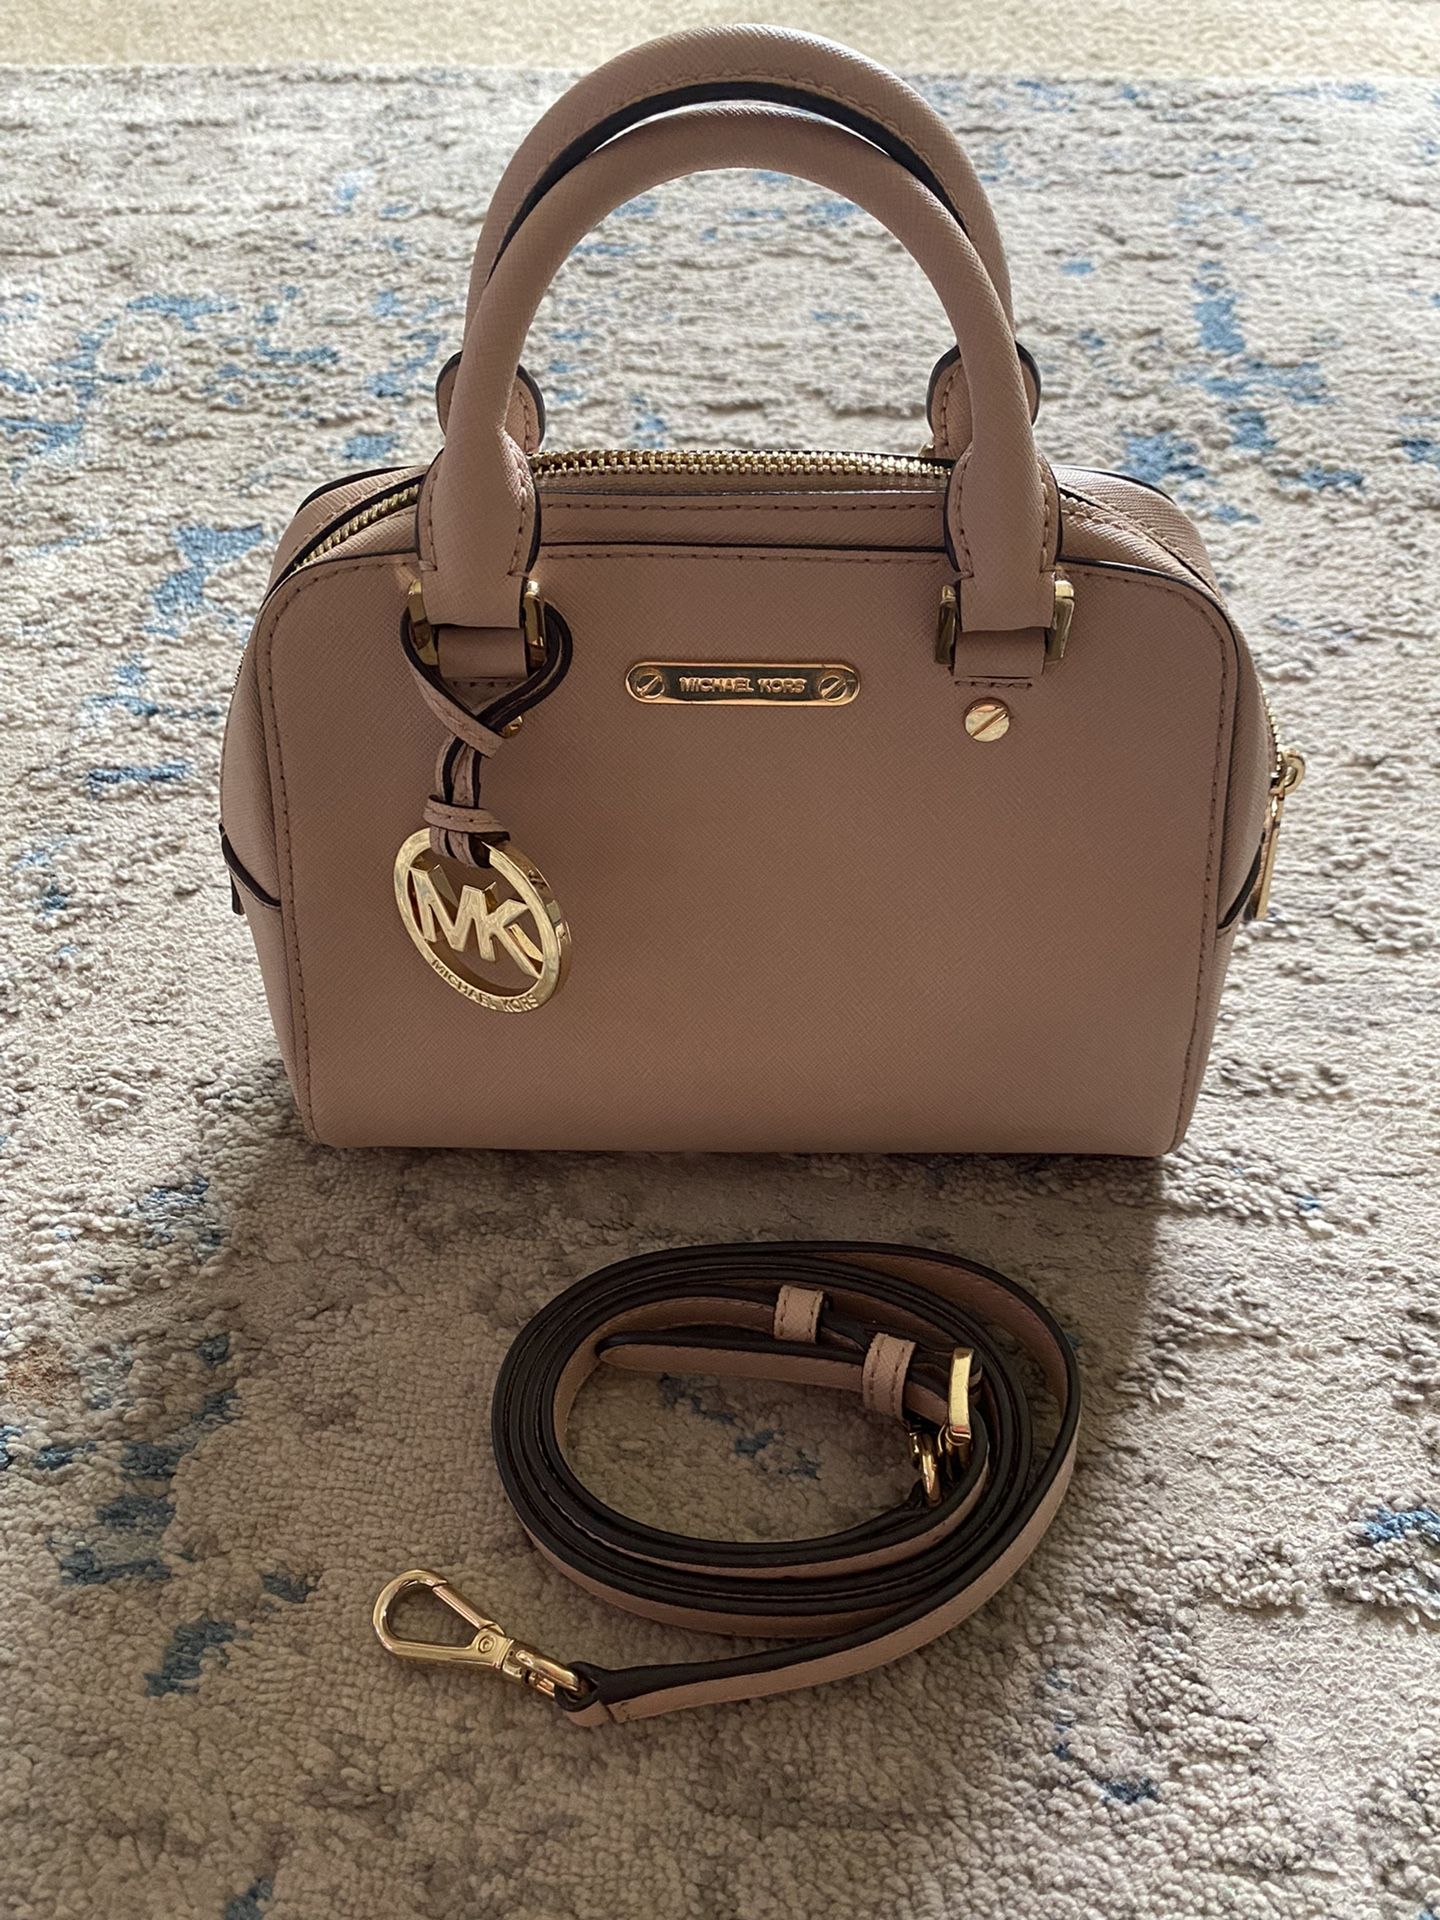 Mini Pink Michael Kors Handbag